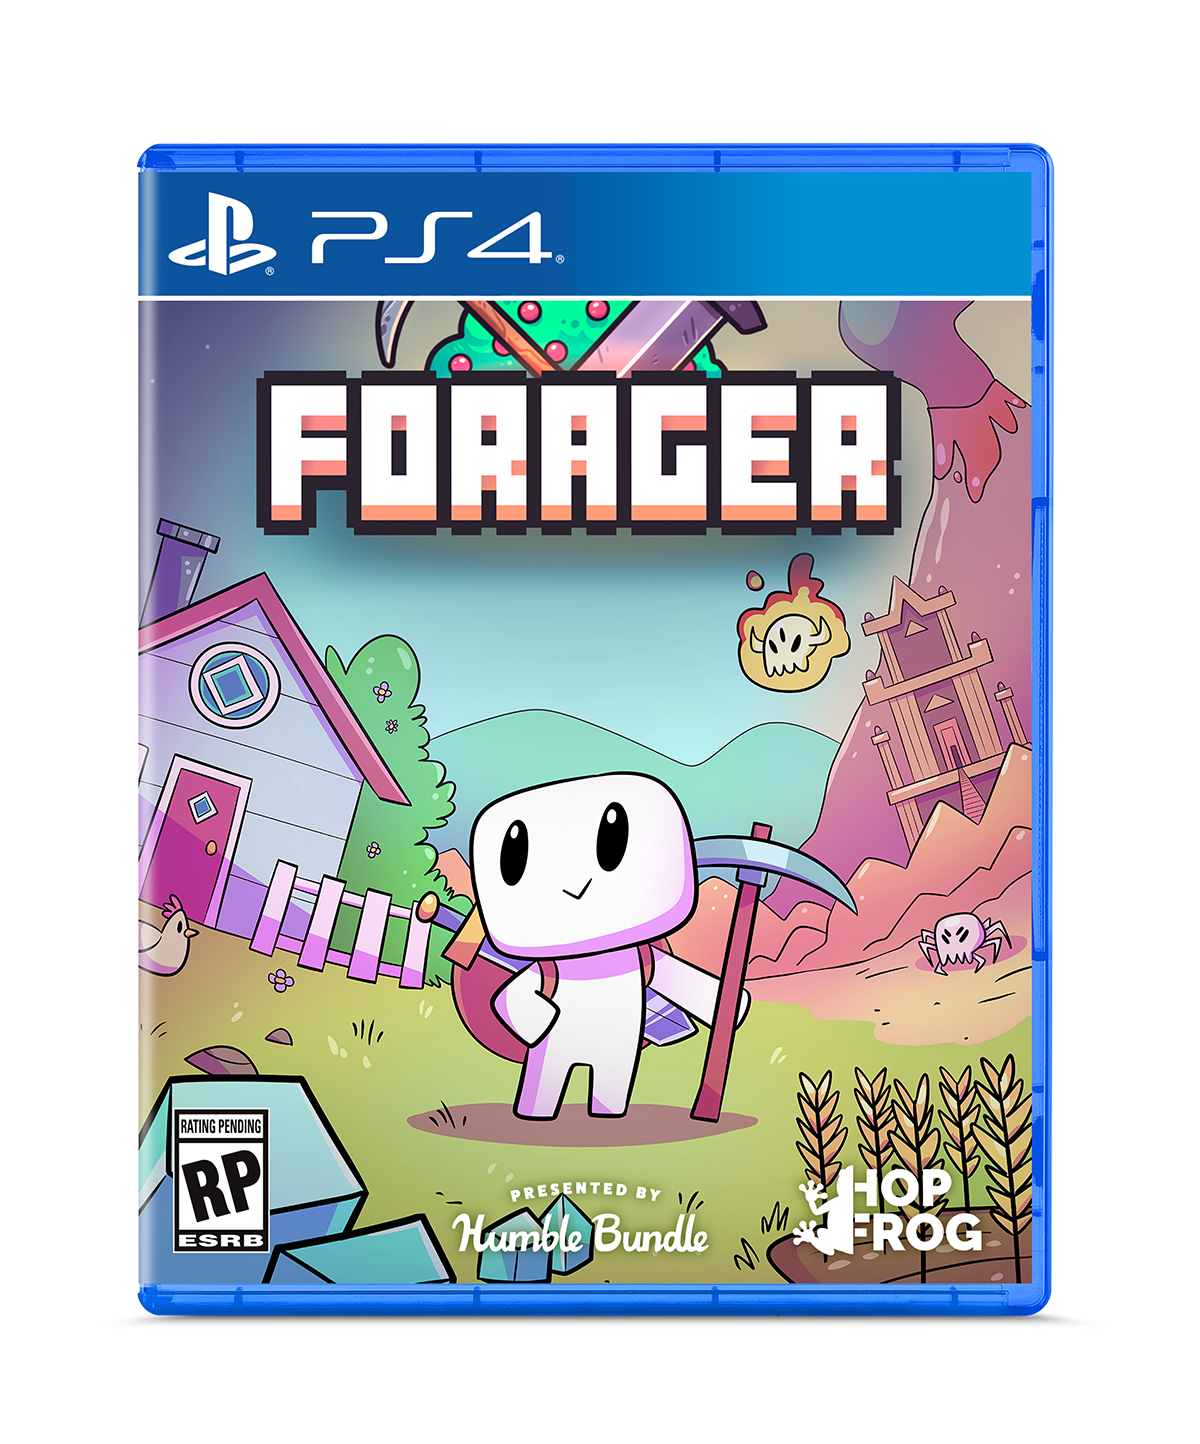 Forager; Nighthawk Interactive; PlayStation 4 